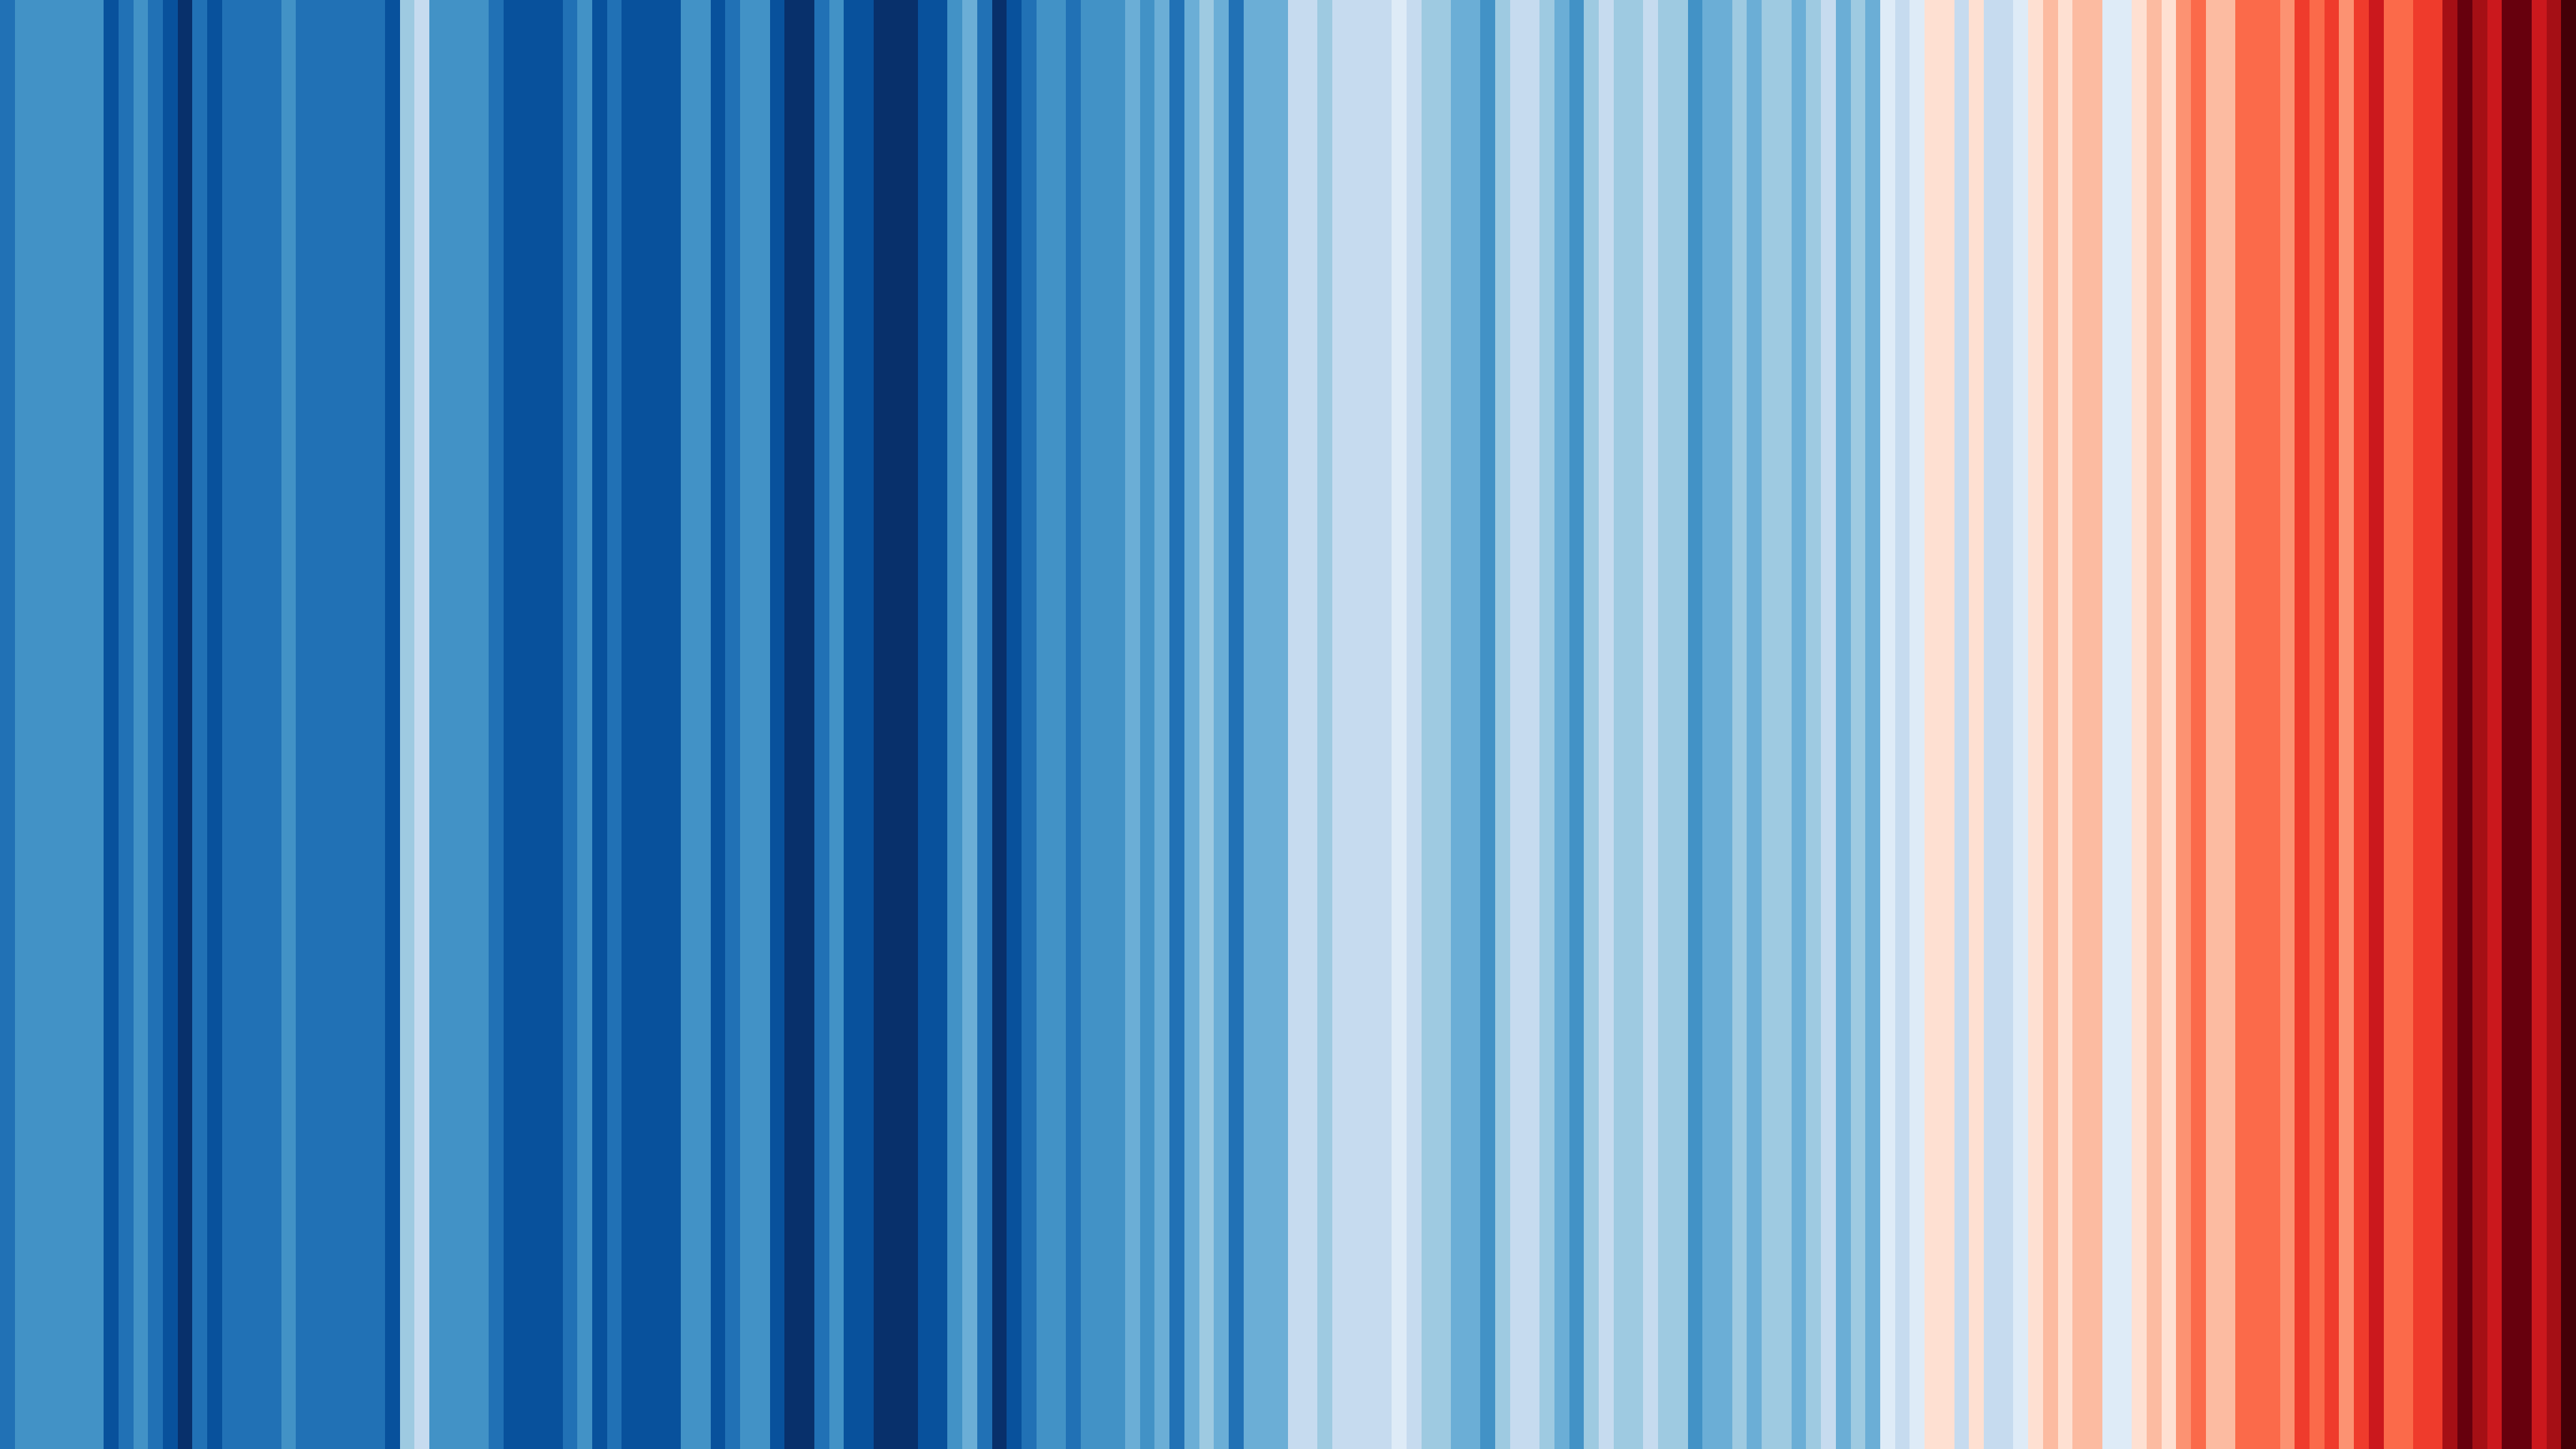 Global temperature change (1850-2023)